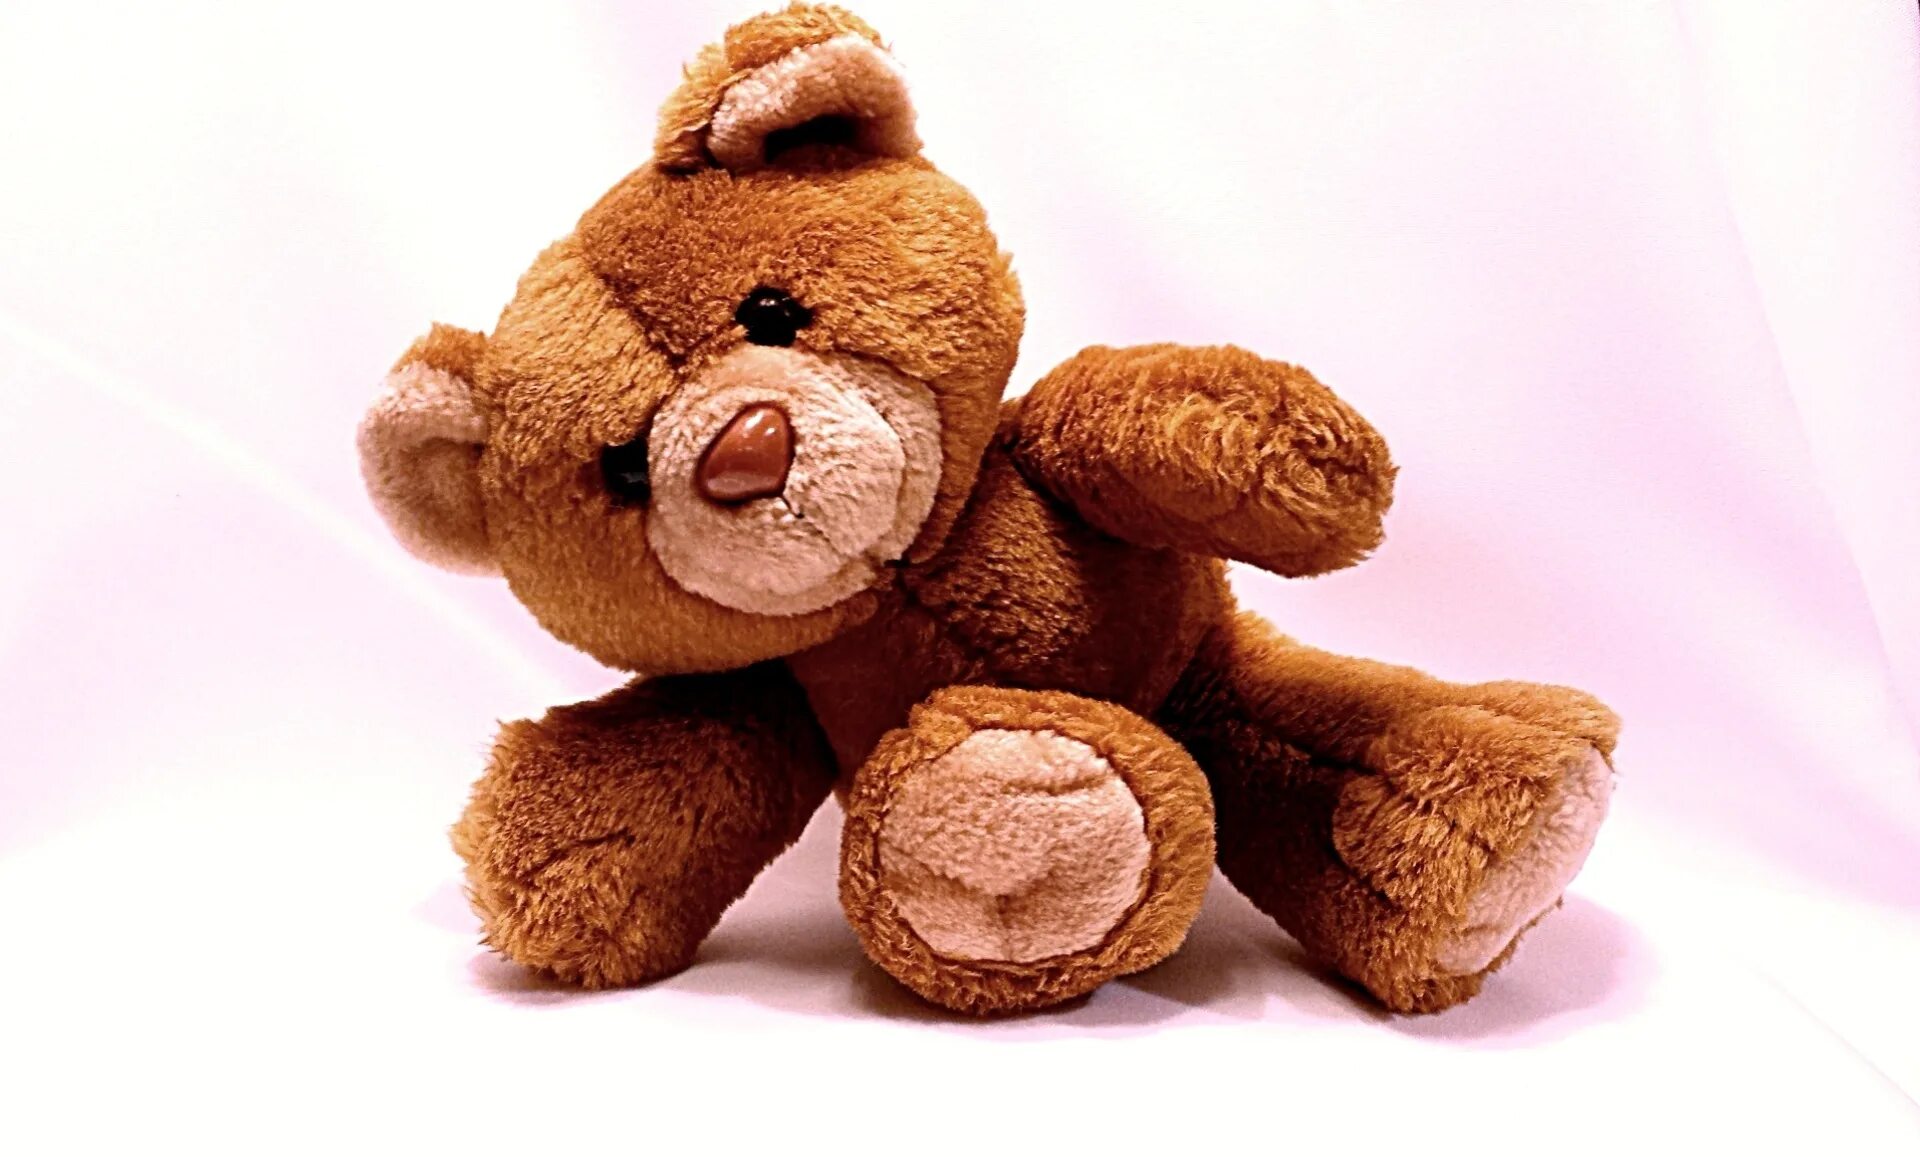 A brown teddy bear. Плюшевый мишка. Плюшевый мишка коричневый. Плюшевый медведь коричневый. Коричневый плюшевый мишка игрушки.